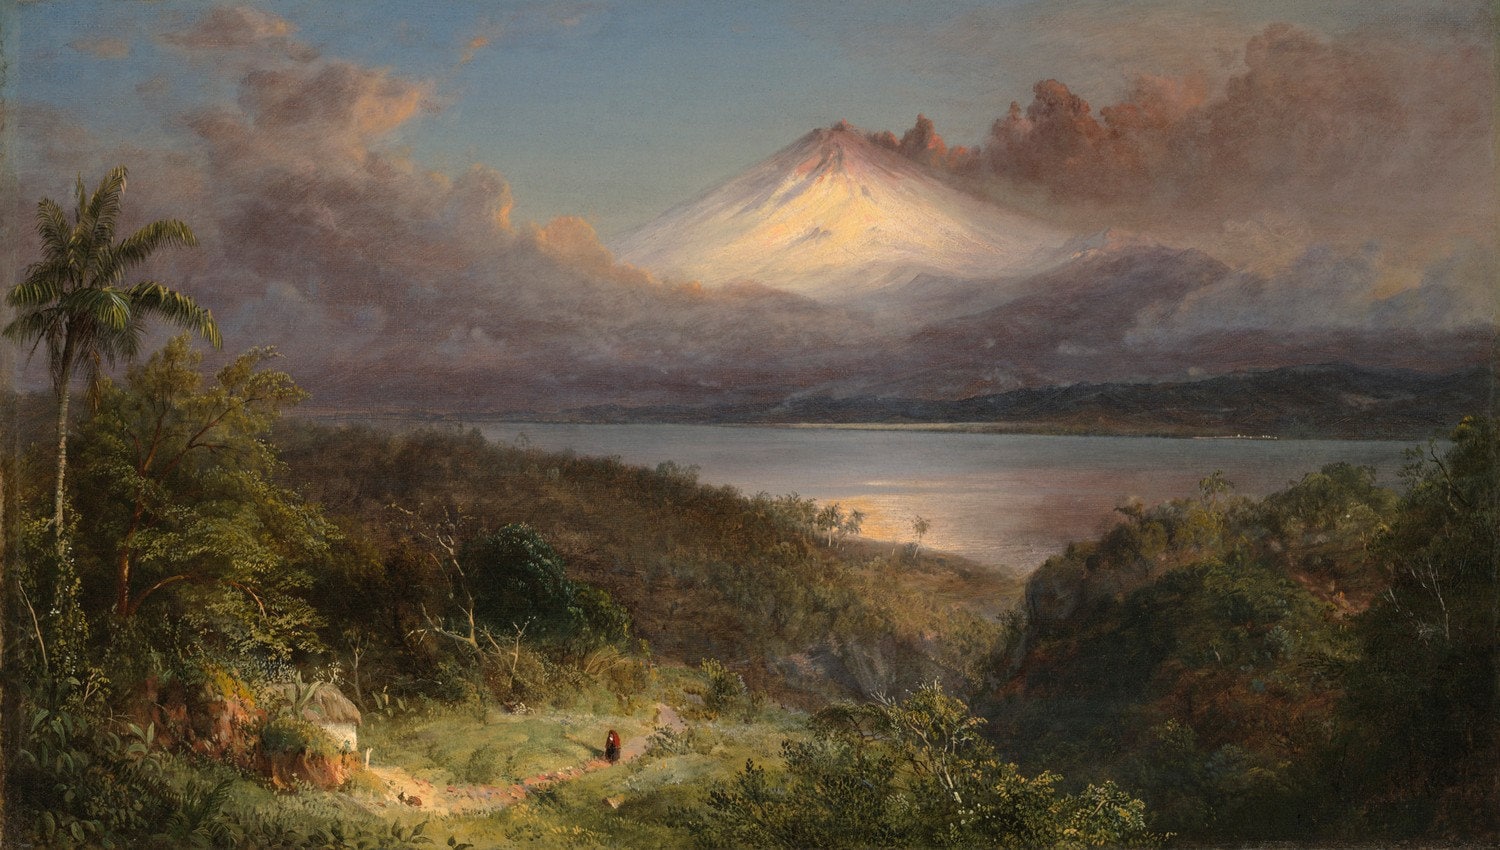 1500x850, 255 Kb / Frederic Edwin Church, картина, женщина, путница, гора, воды, деревья, кусты, тропы, дым, вулкан, вечер